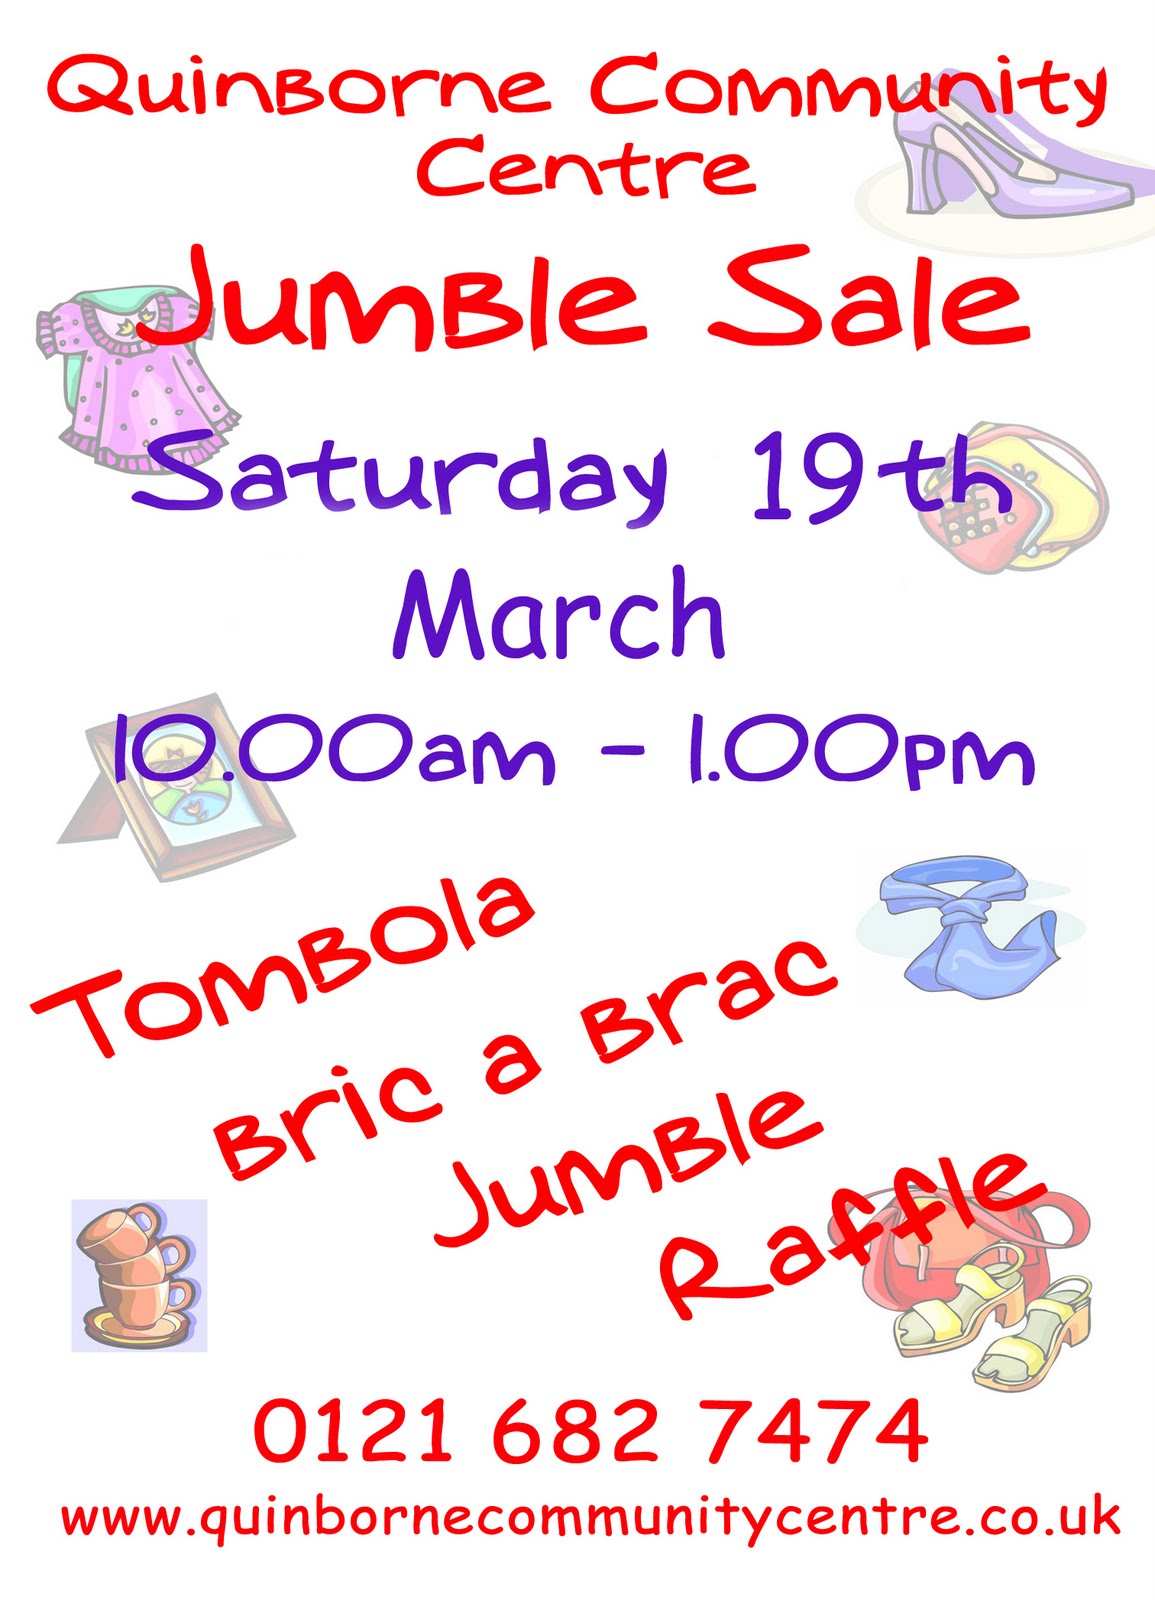 Peter Smallbone's Blog: Quinborne Jumble Sale, Saturday 19th March ...